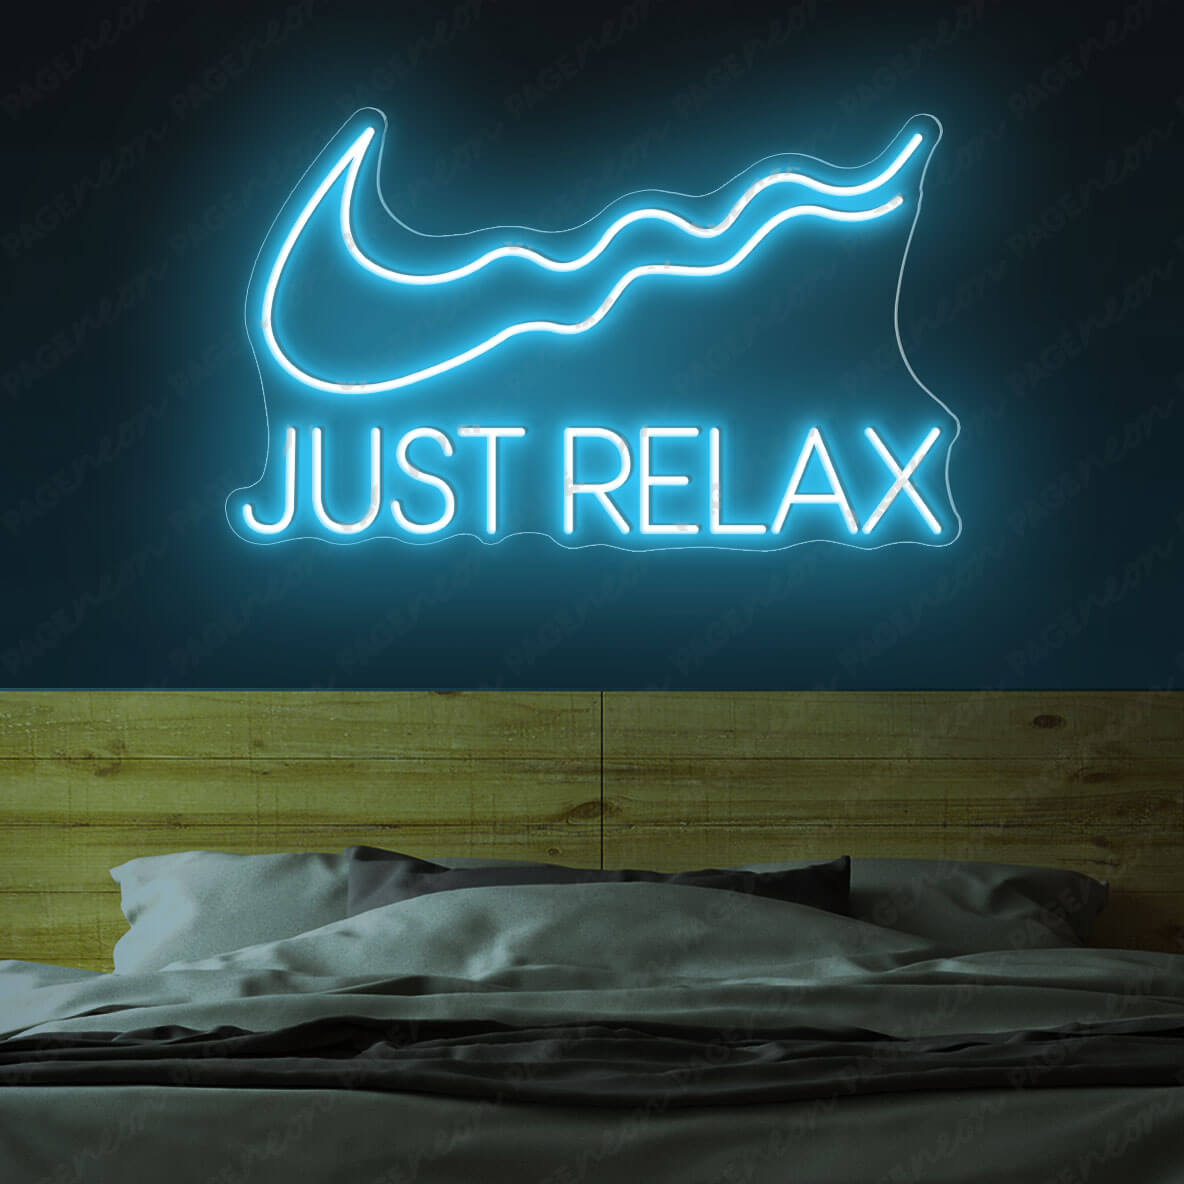 Just Relax Neon Sign Led Light Light Blue